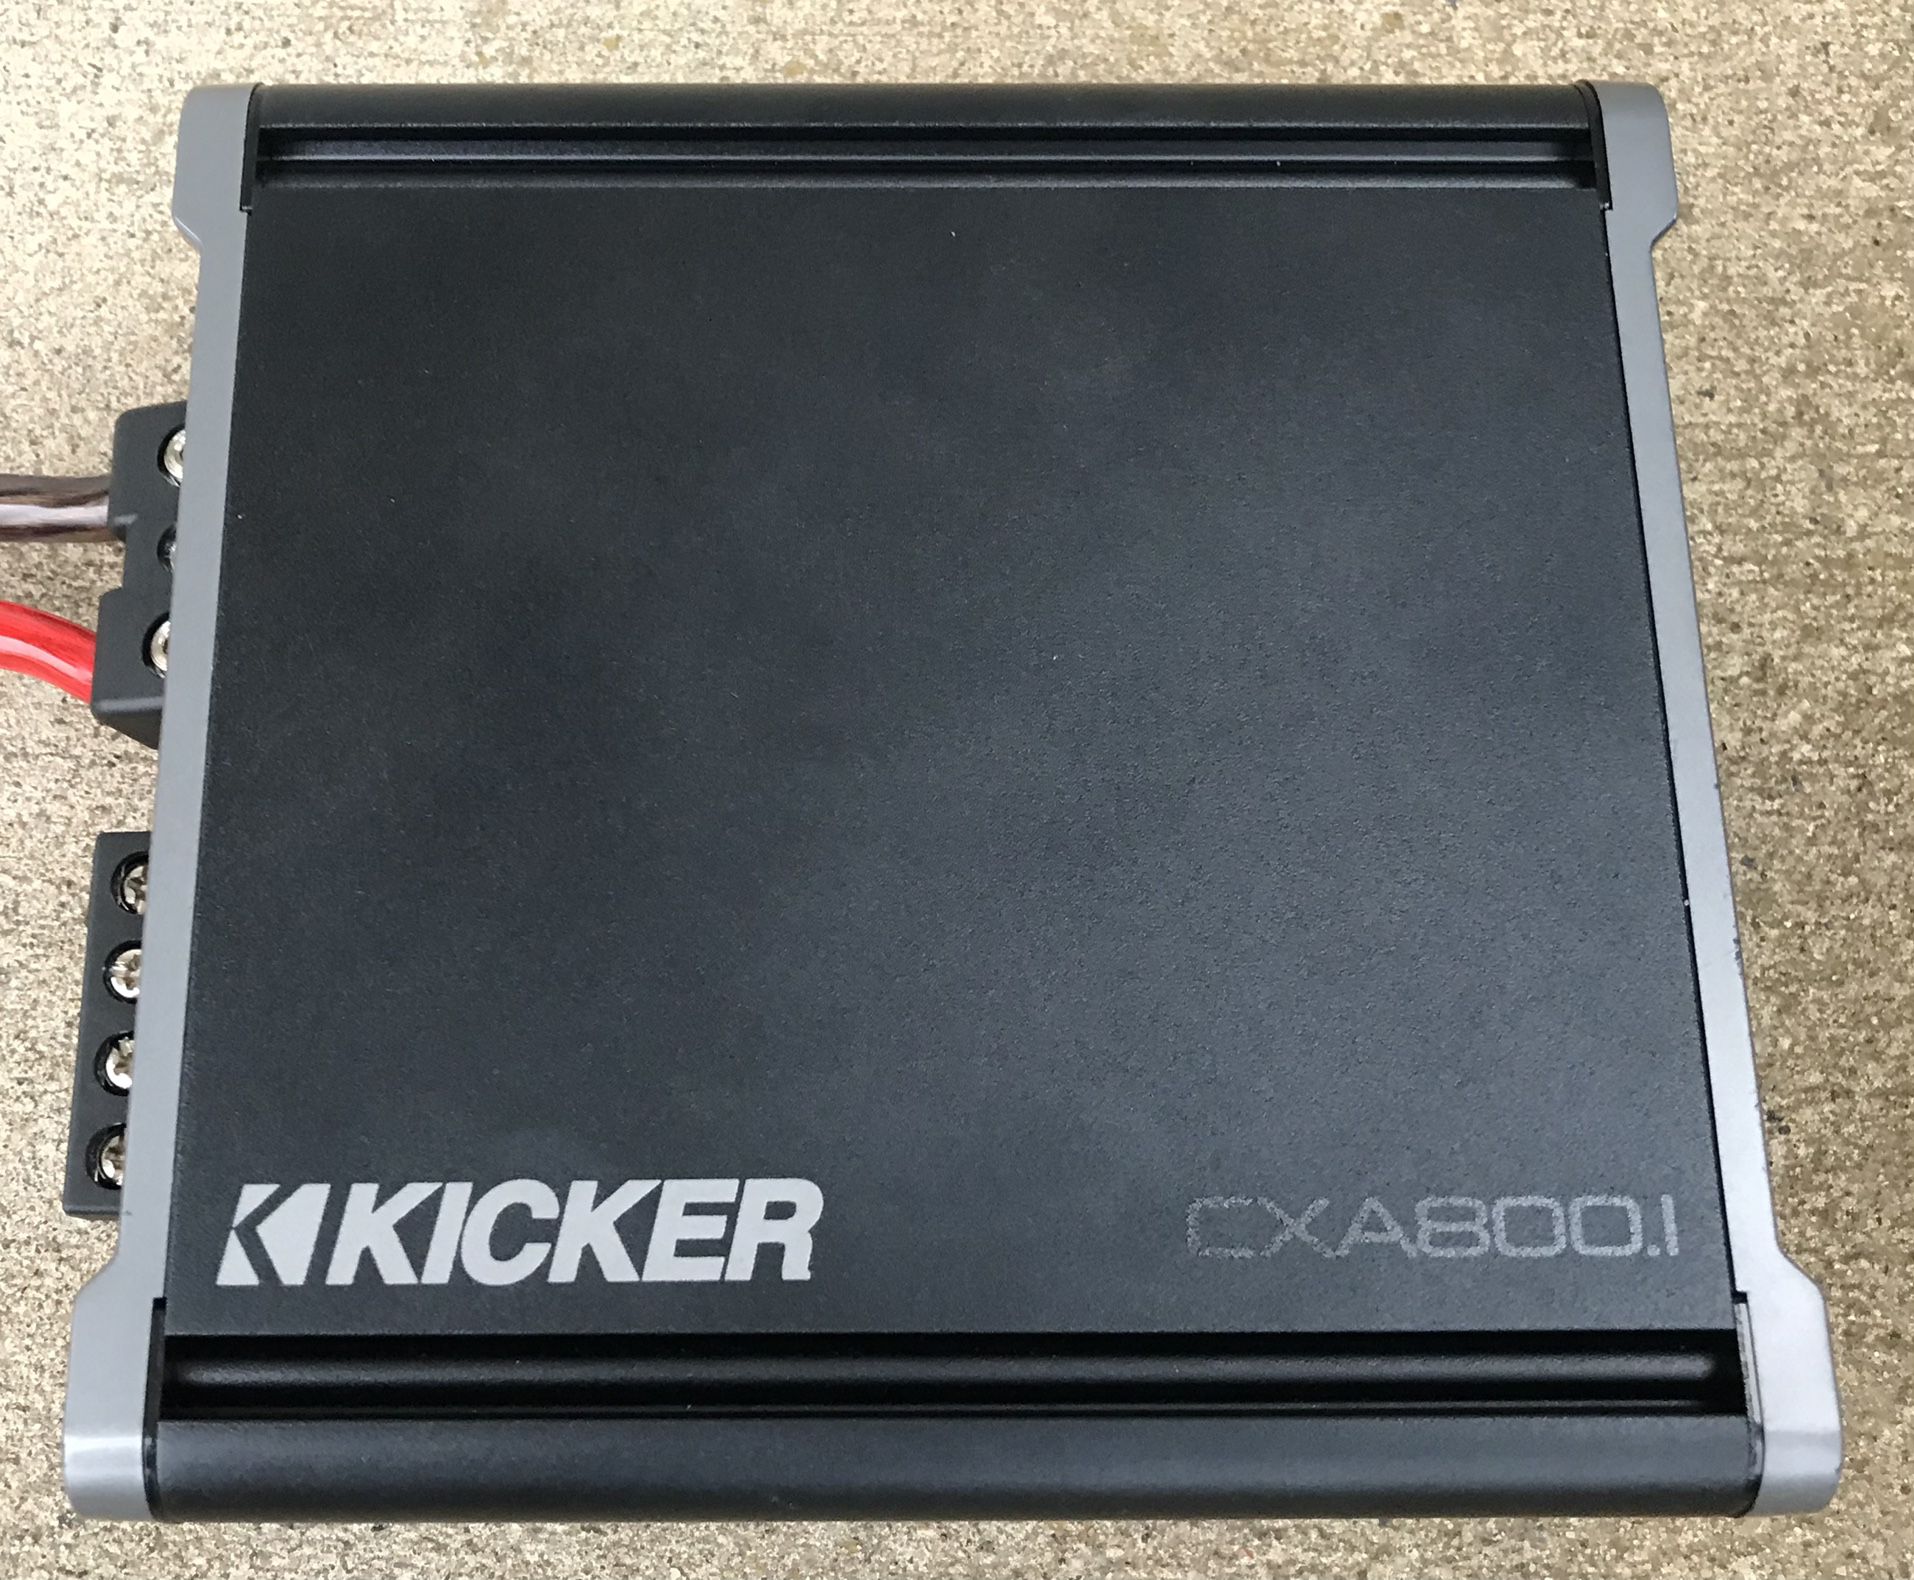 Kicker 46CXA8001 Car Audio Class D Amp Mono 1600W Peak Sub Amplifier CXA800.1 